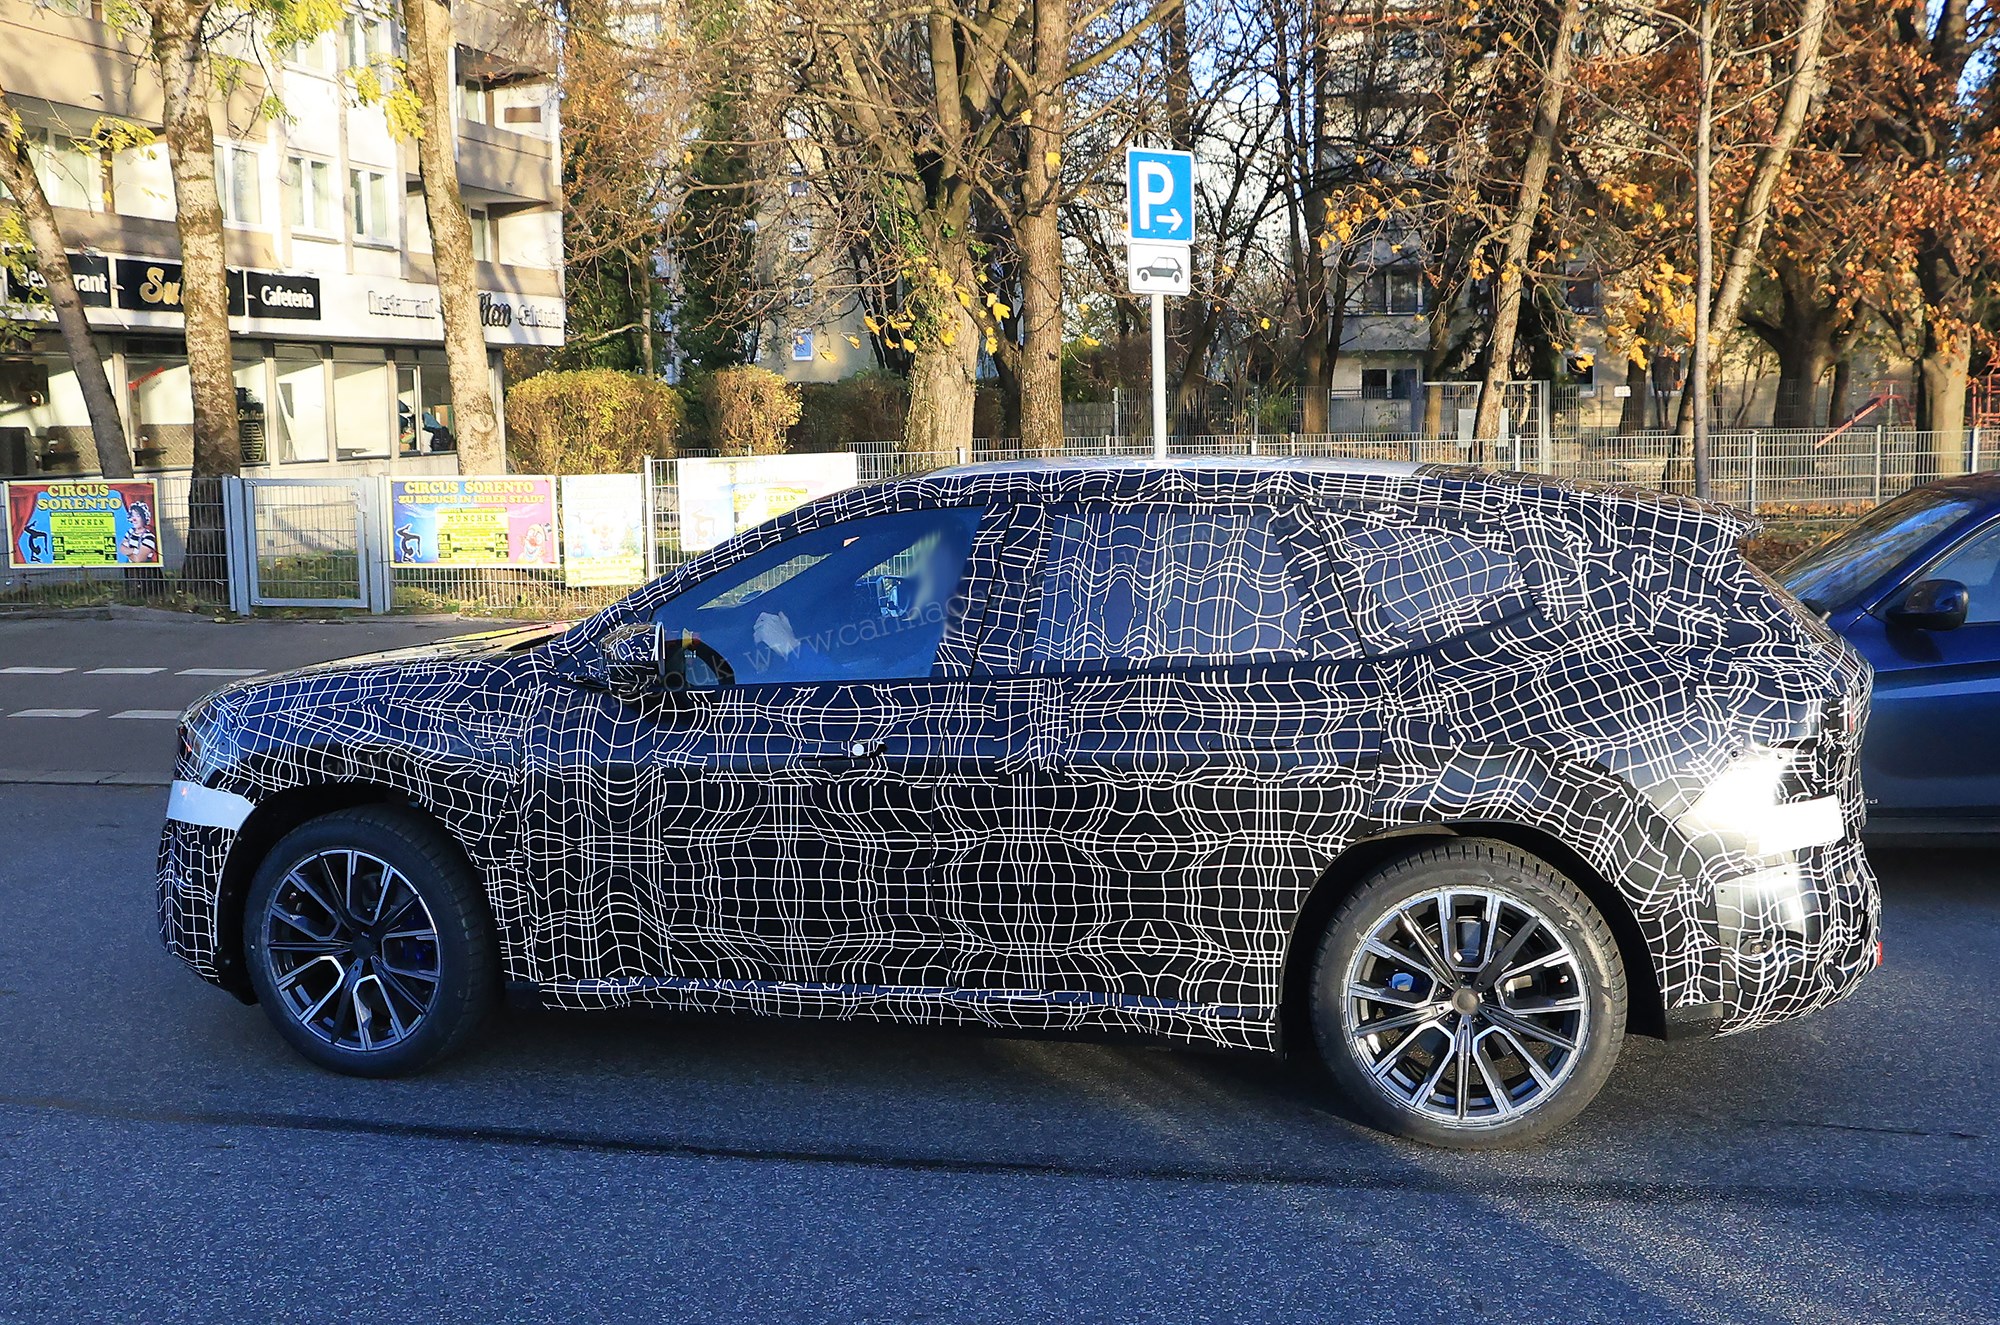 2025 BMW X3: What We Know So Far